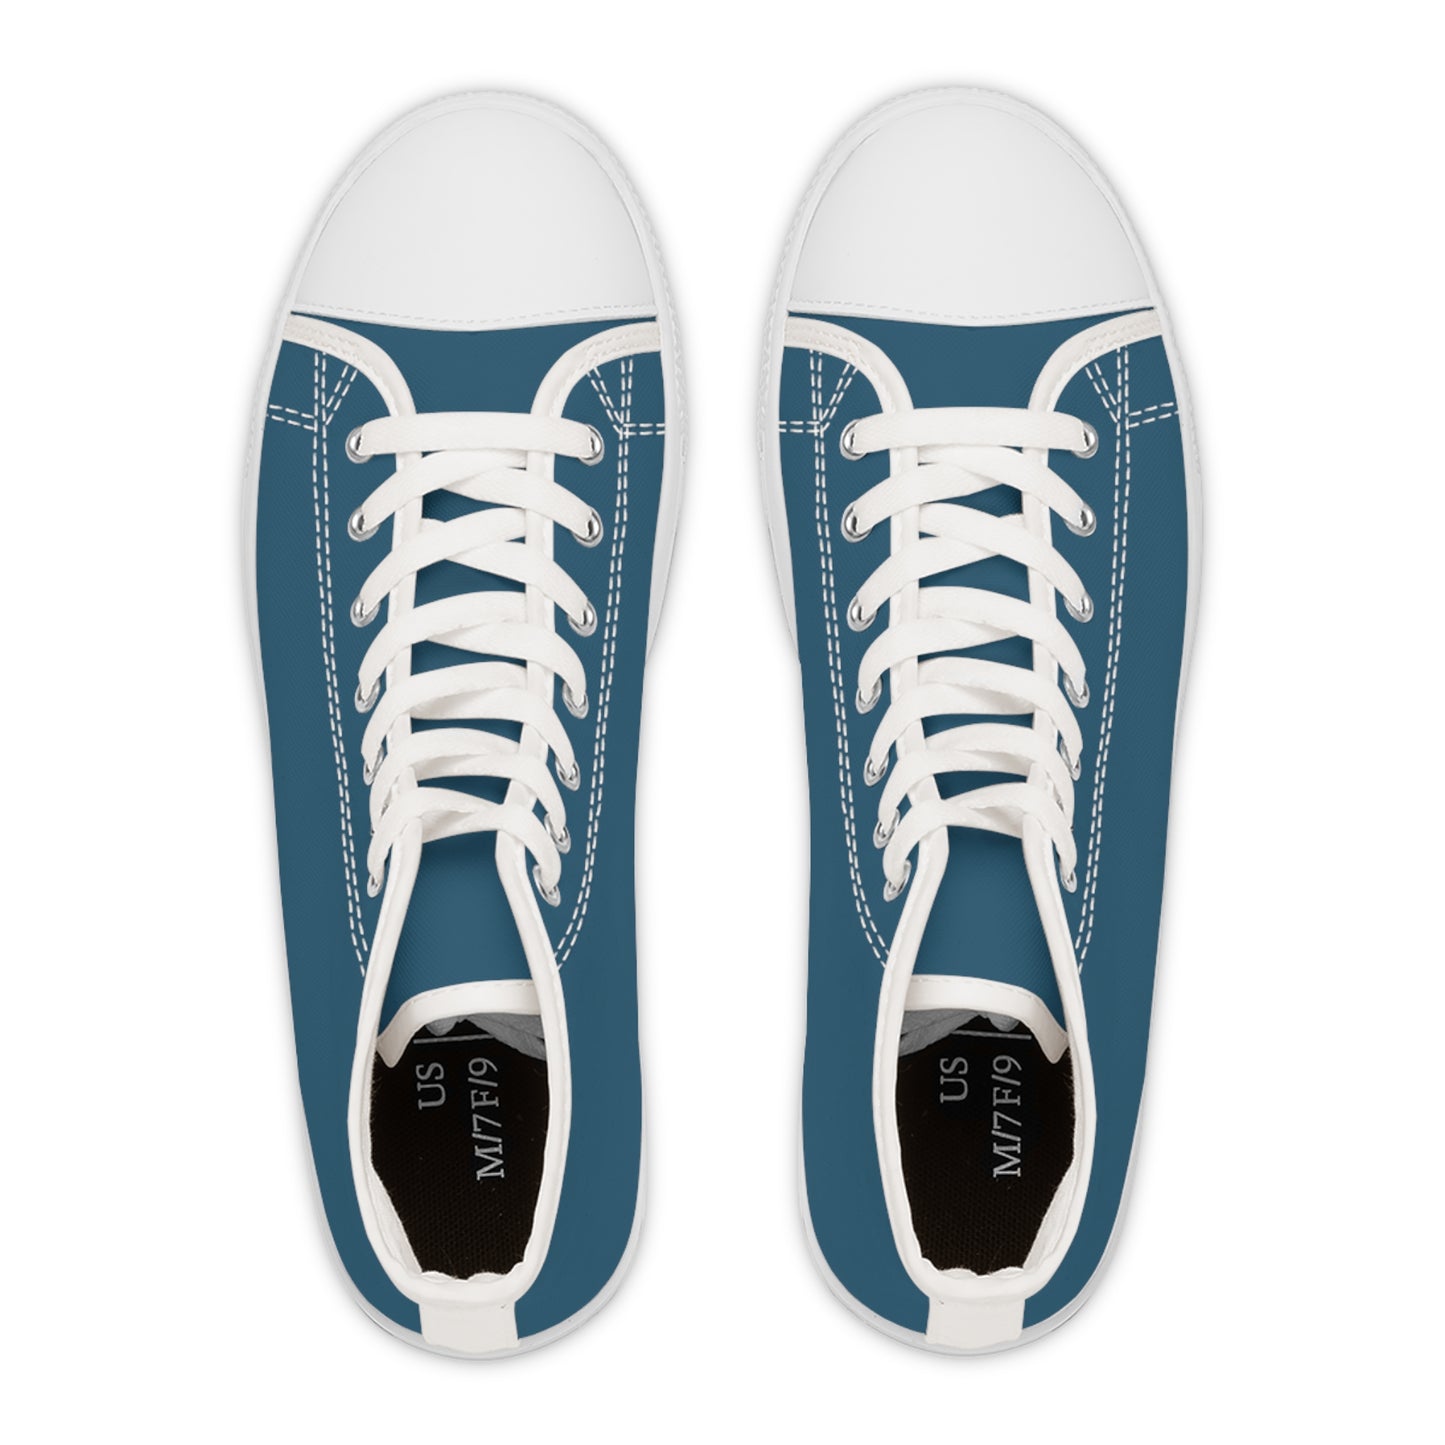 Women's High Top Sneakers - Dark Blue US 12 White sole